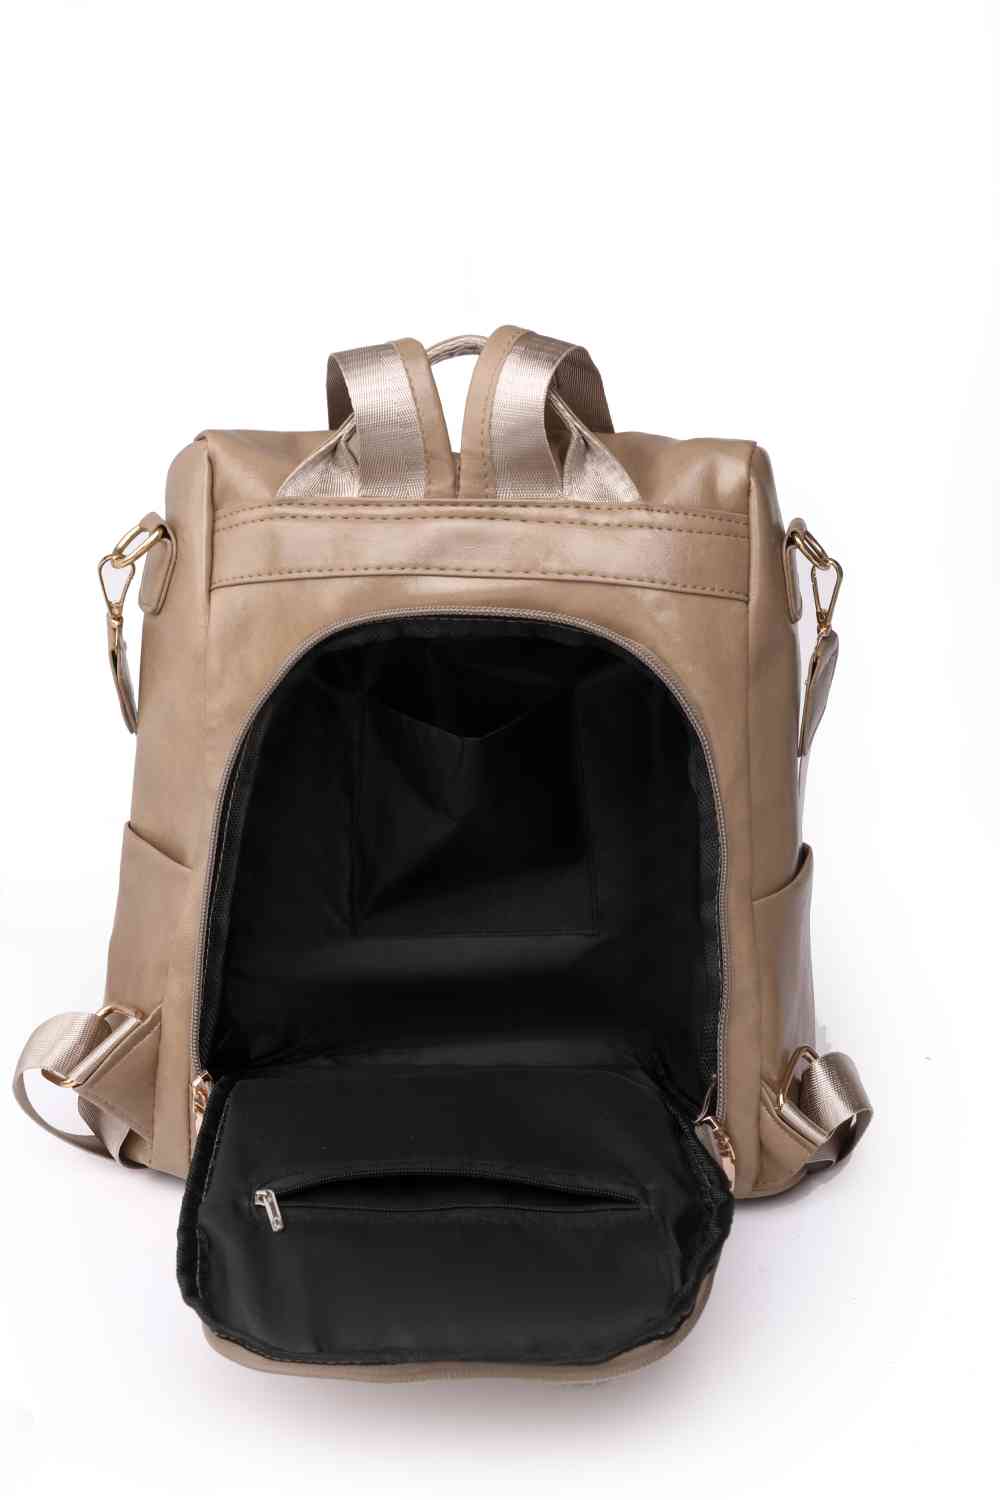 Traveler's Companion Zipper Pocket Vegan Leather Backpack | Hypoallergenic - Allergy Friendly - Naturally Free